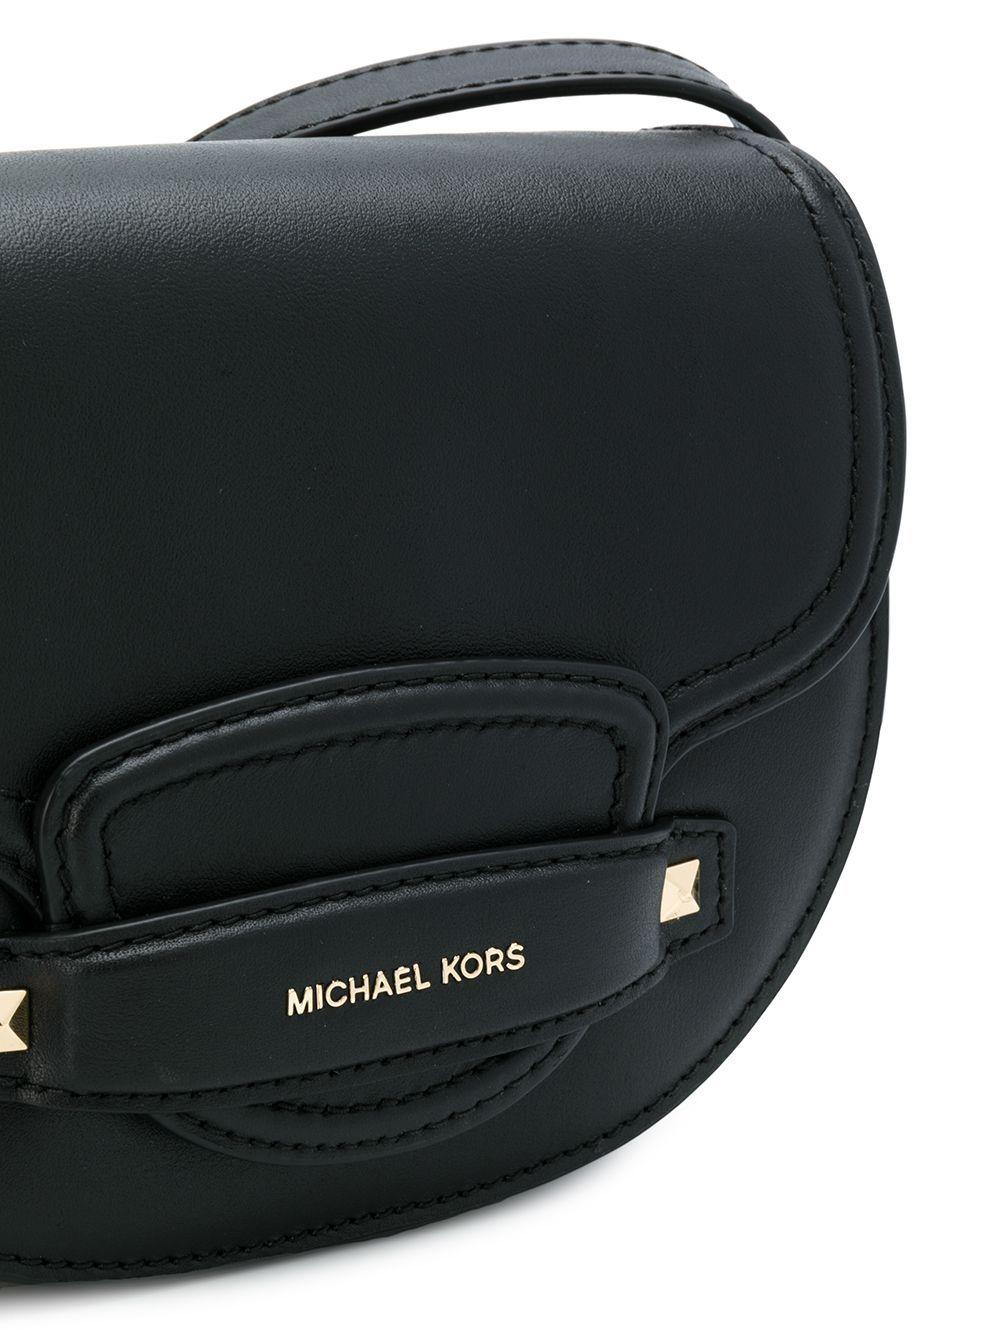 MICHAEL Michael Kors Leather Cary Mini Crossbody Bag in Black - Lyst